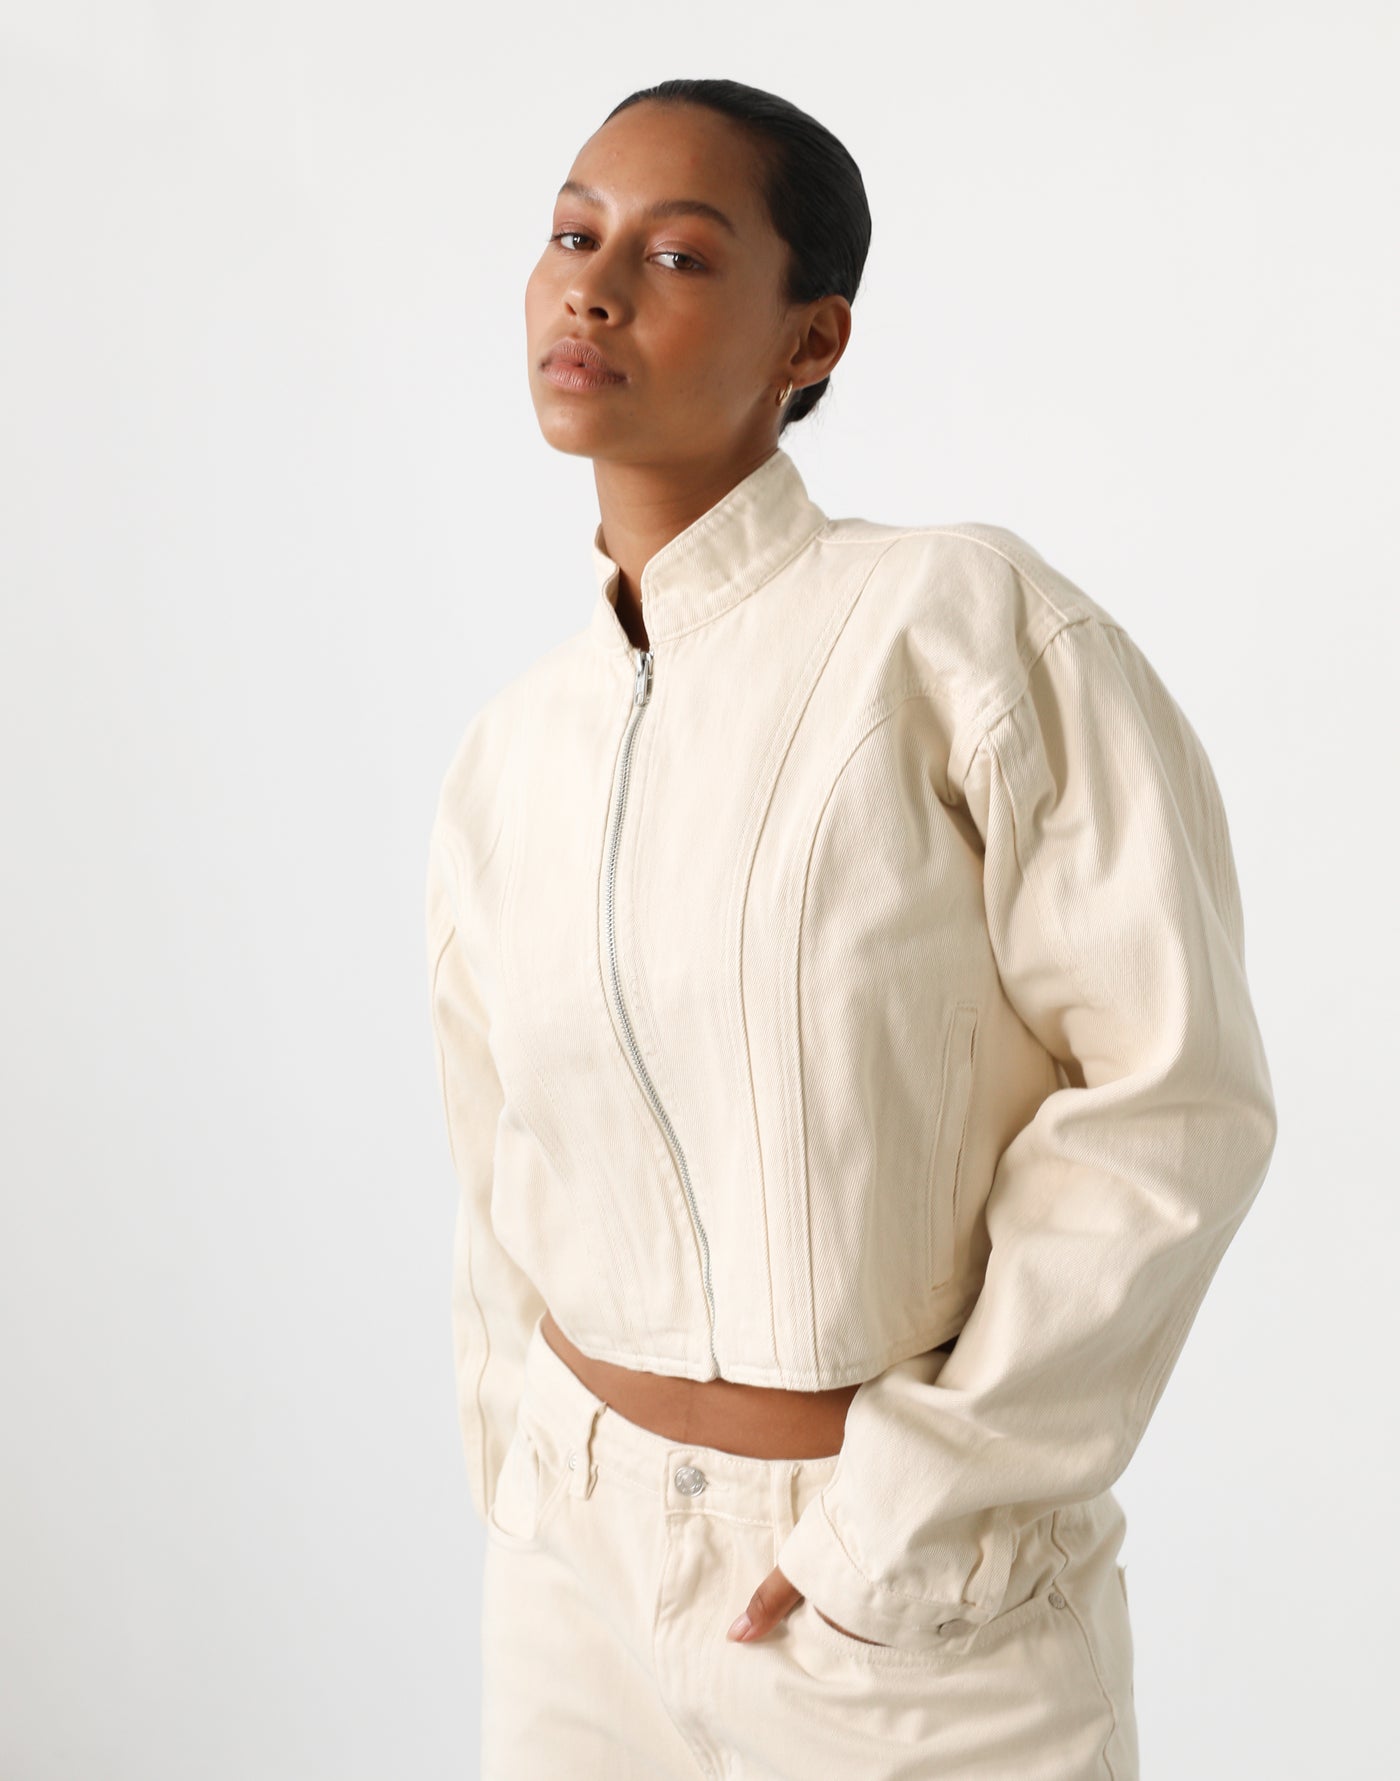 Chad Denim Jacket (Pumice) - Pumice Denim Jacket - Women's Outerwear - Charcoal Clothing